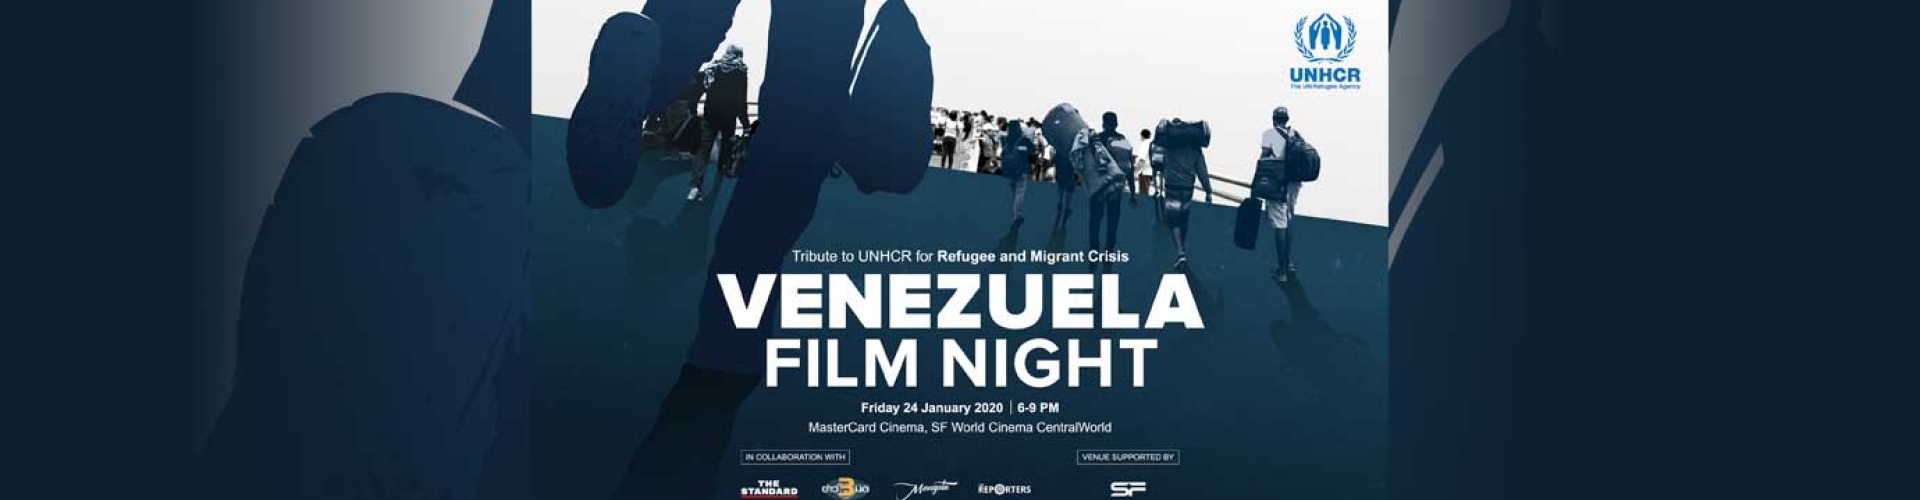 Venezuela Film Night : Tribute to UNHCR for Venezuelan Refugee and Migrant Crisis